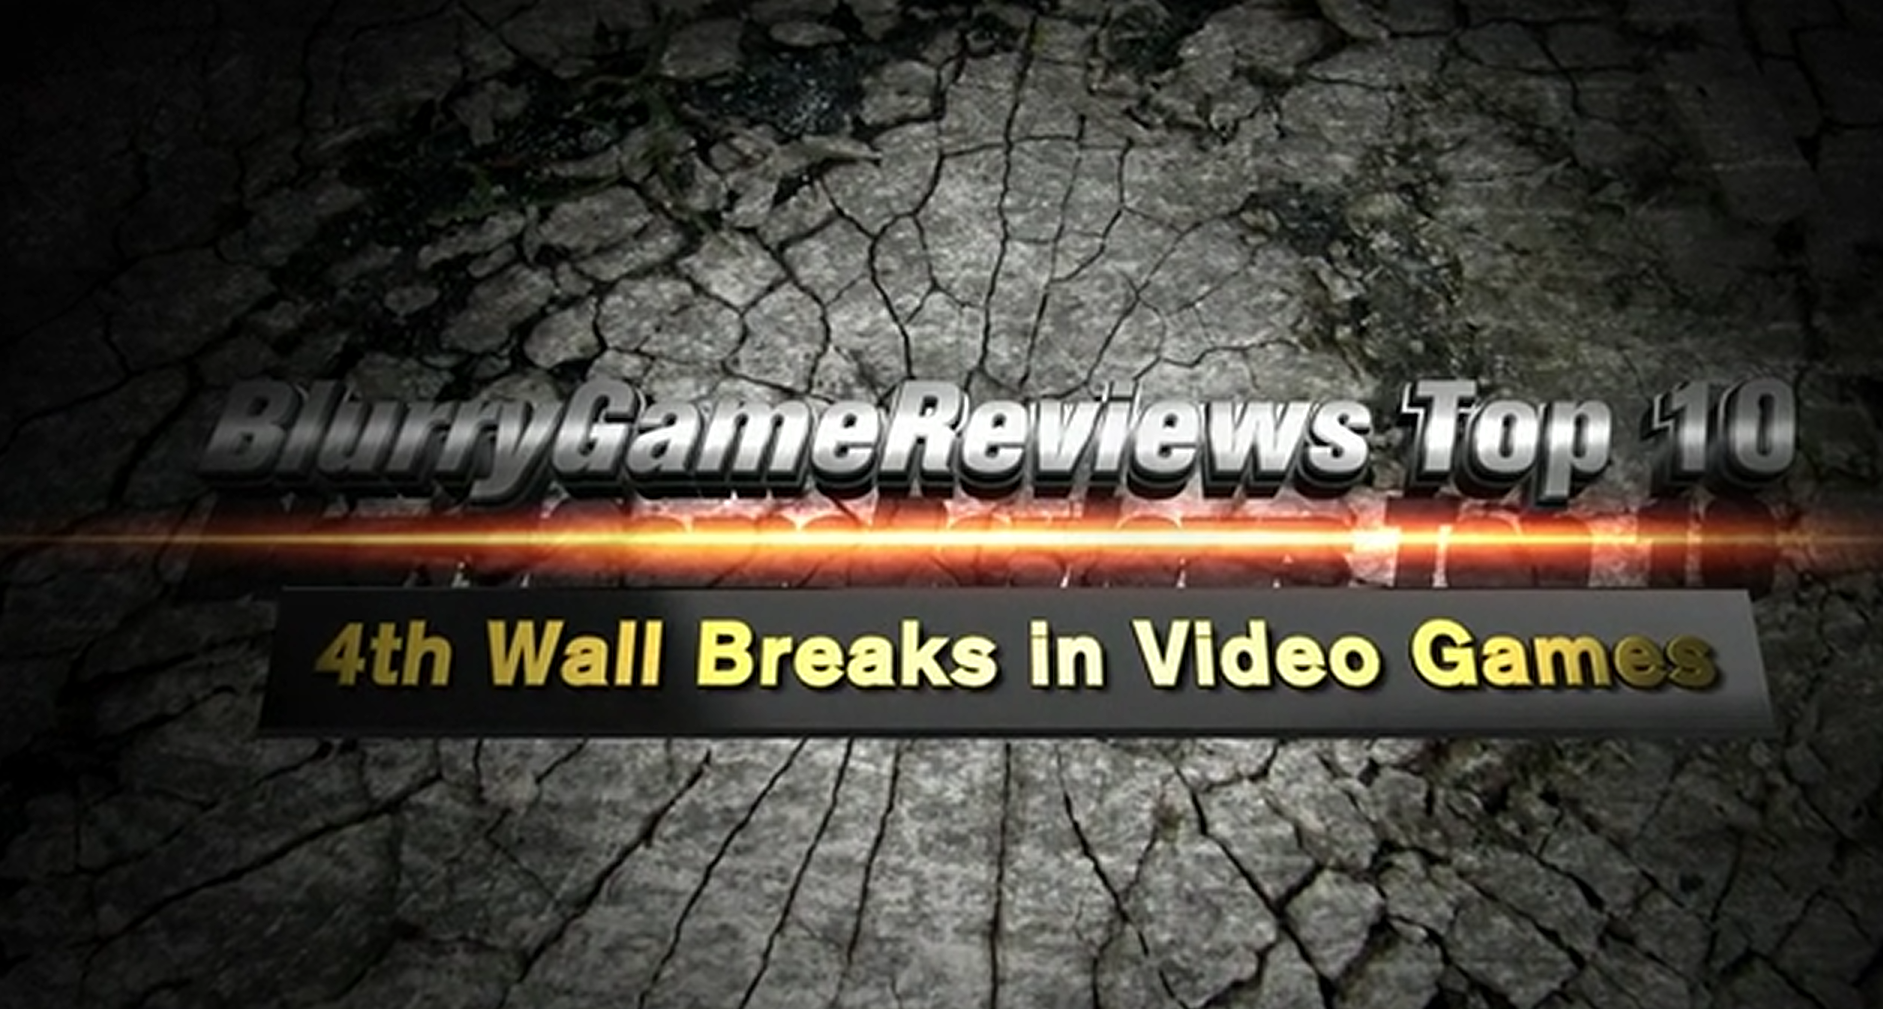 BlurryPhoenix’s Top 10: 4th Wall Breaks in Video Games